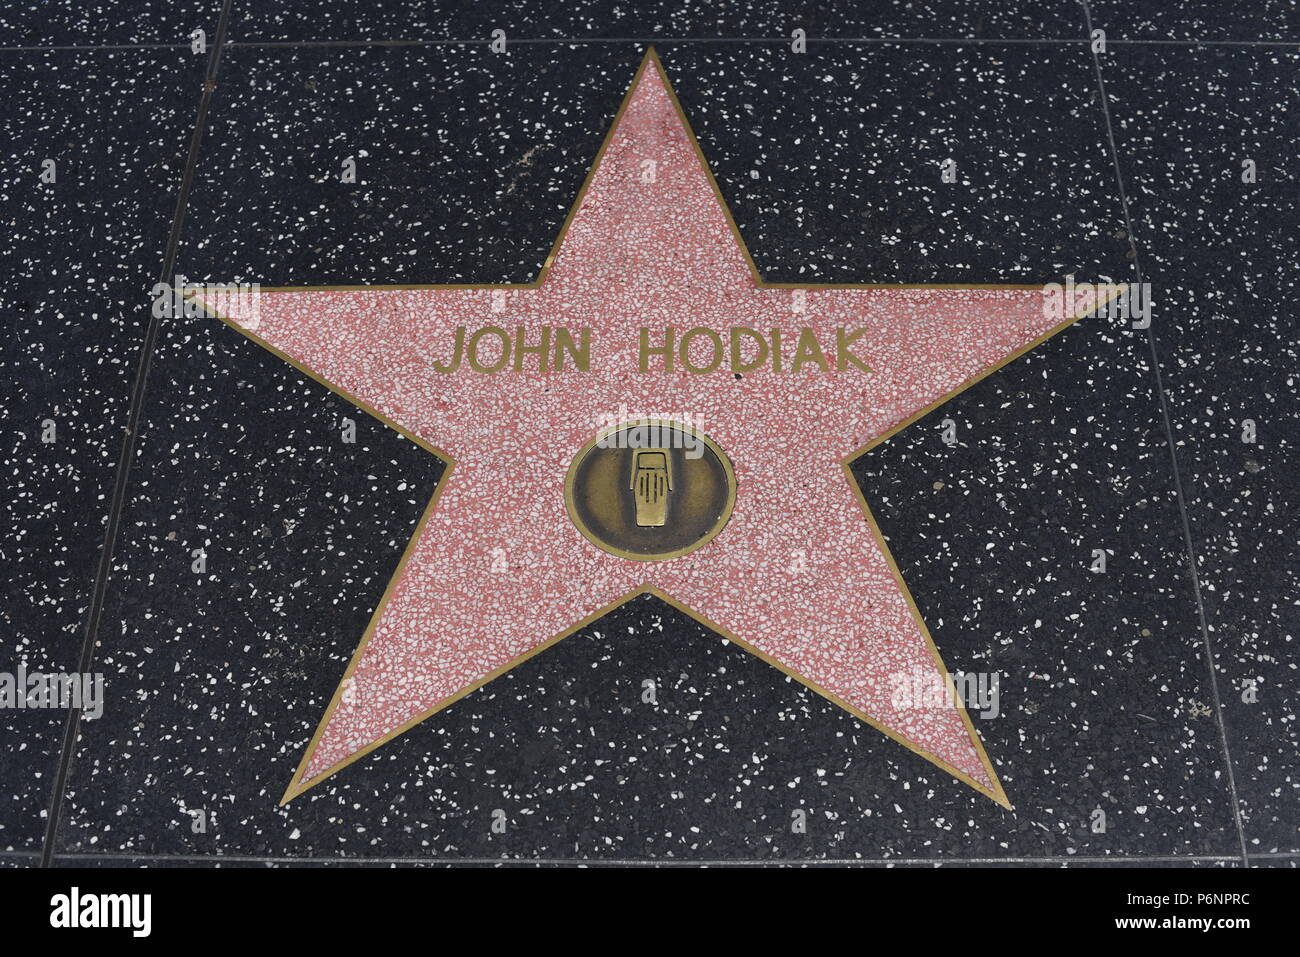 HOLLYWOOD, CA - 29. Juni: John Hodiak Stern auf dem Hollywood Walk of Fame in Hollywood, Kalifornien am 29. Juni 2018. Stockfoto